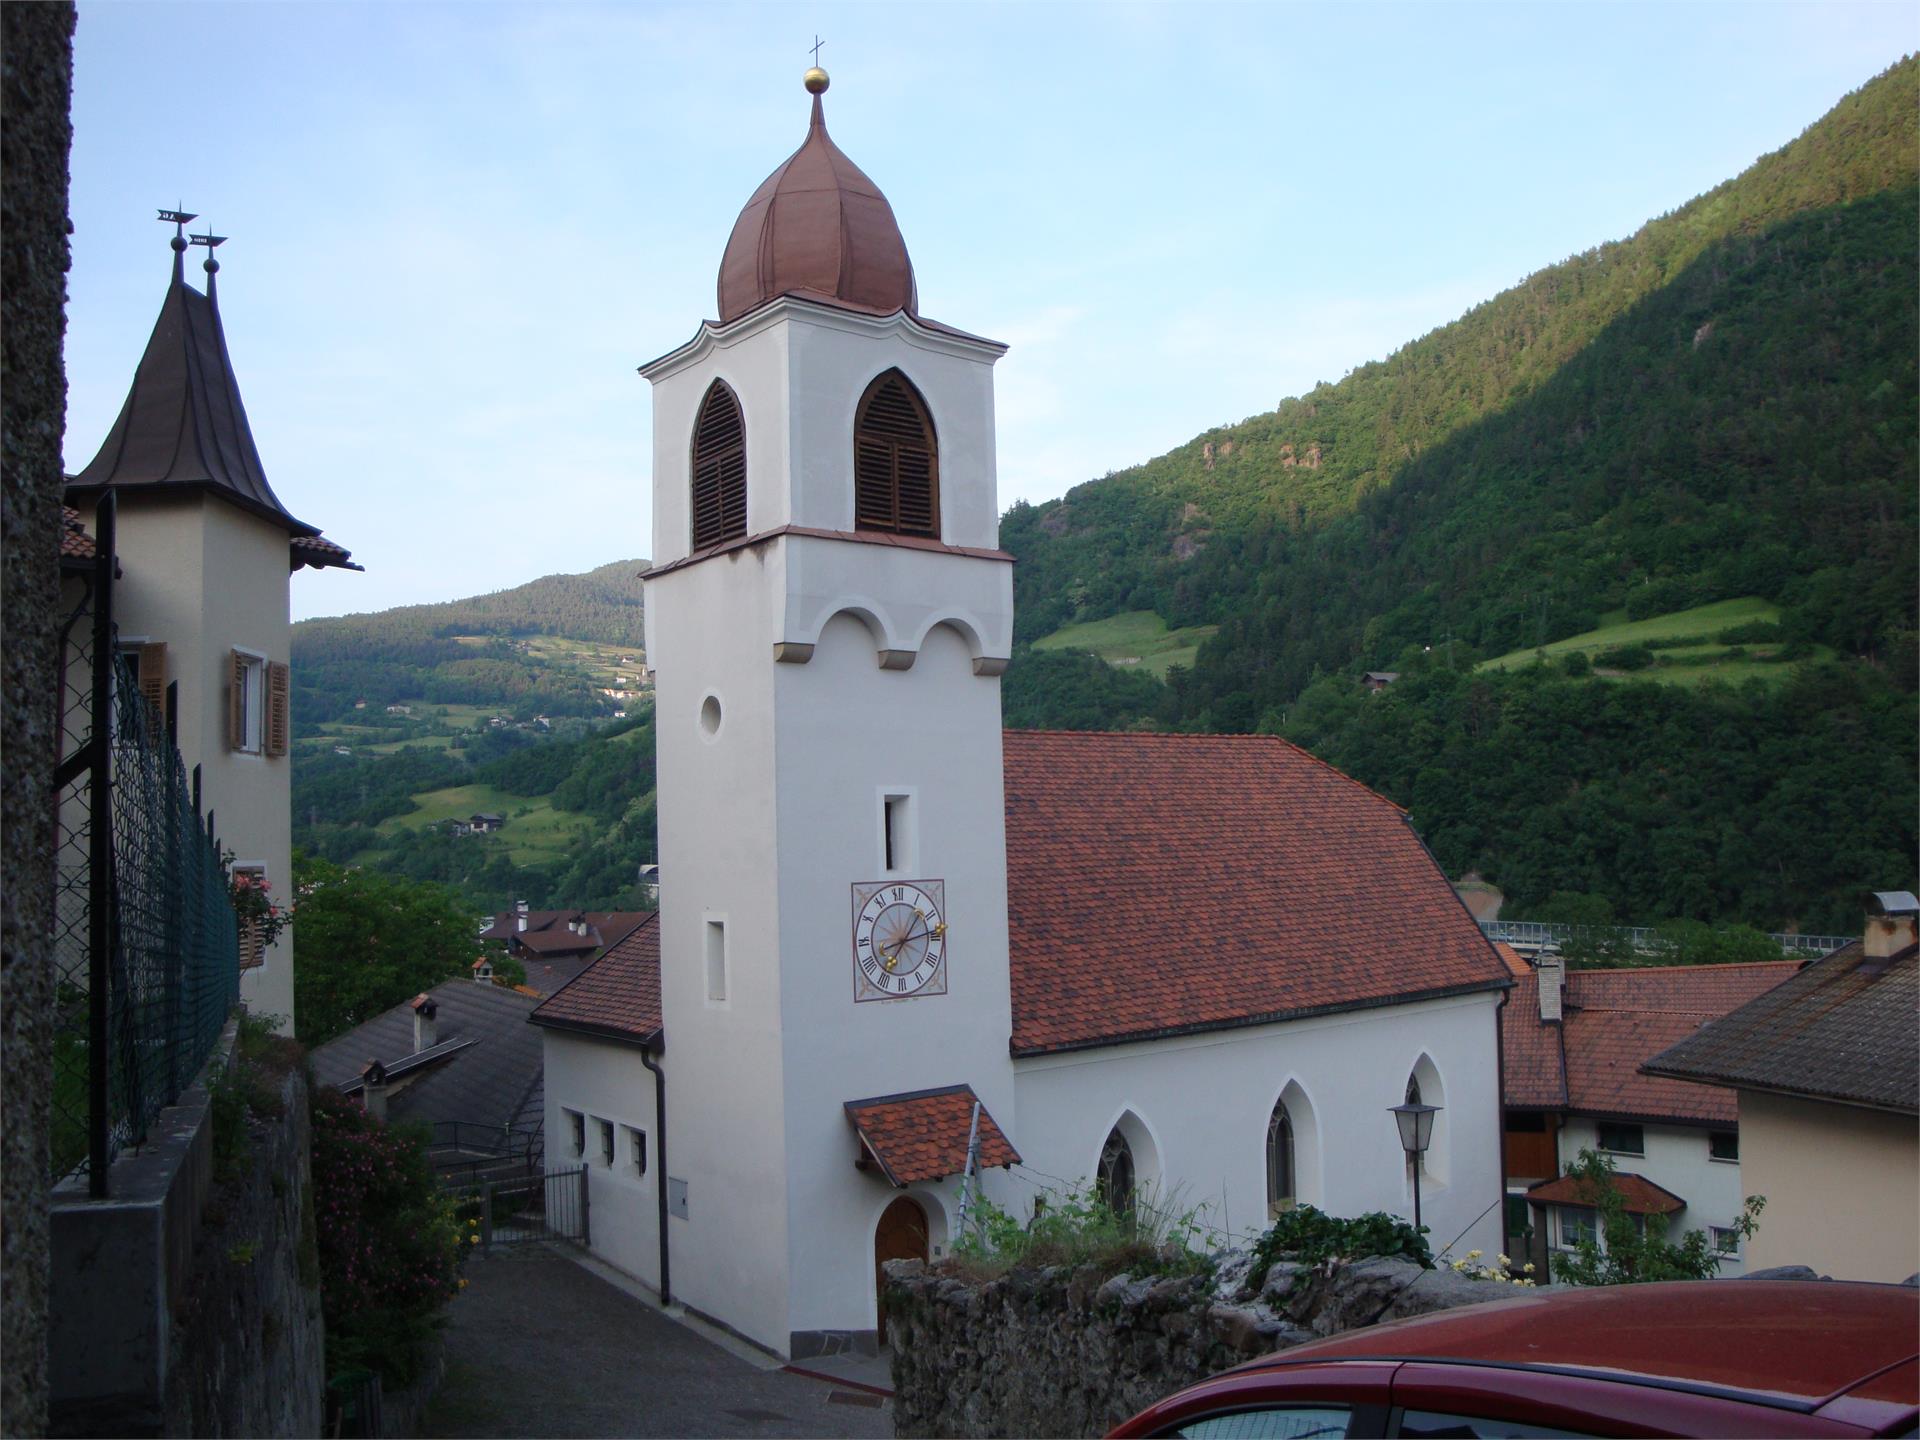 The Holy Trinity Church in Colma/Kollmann